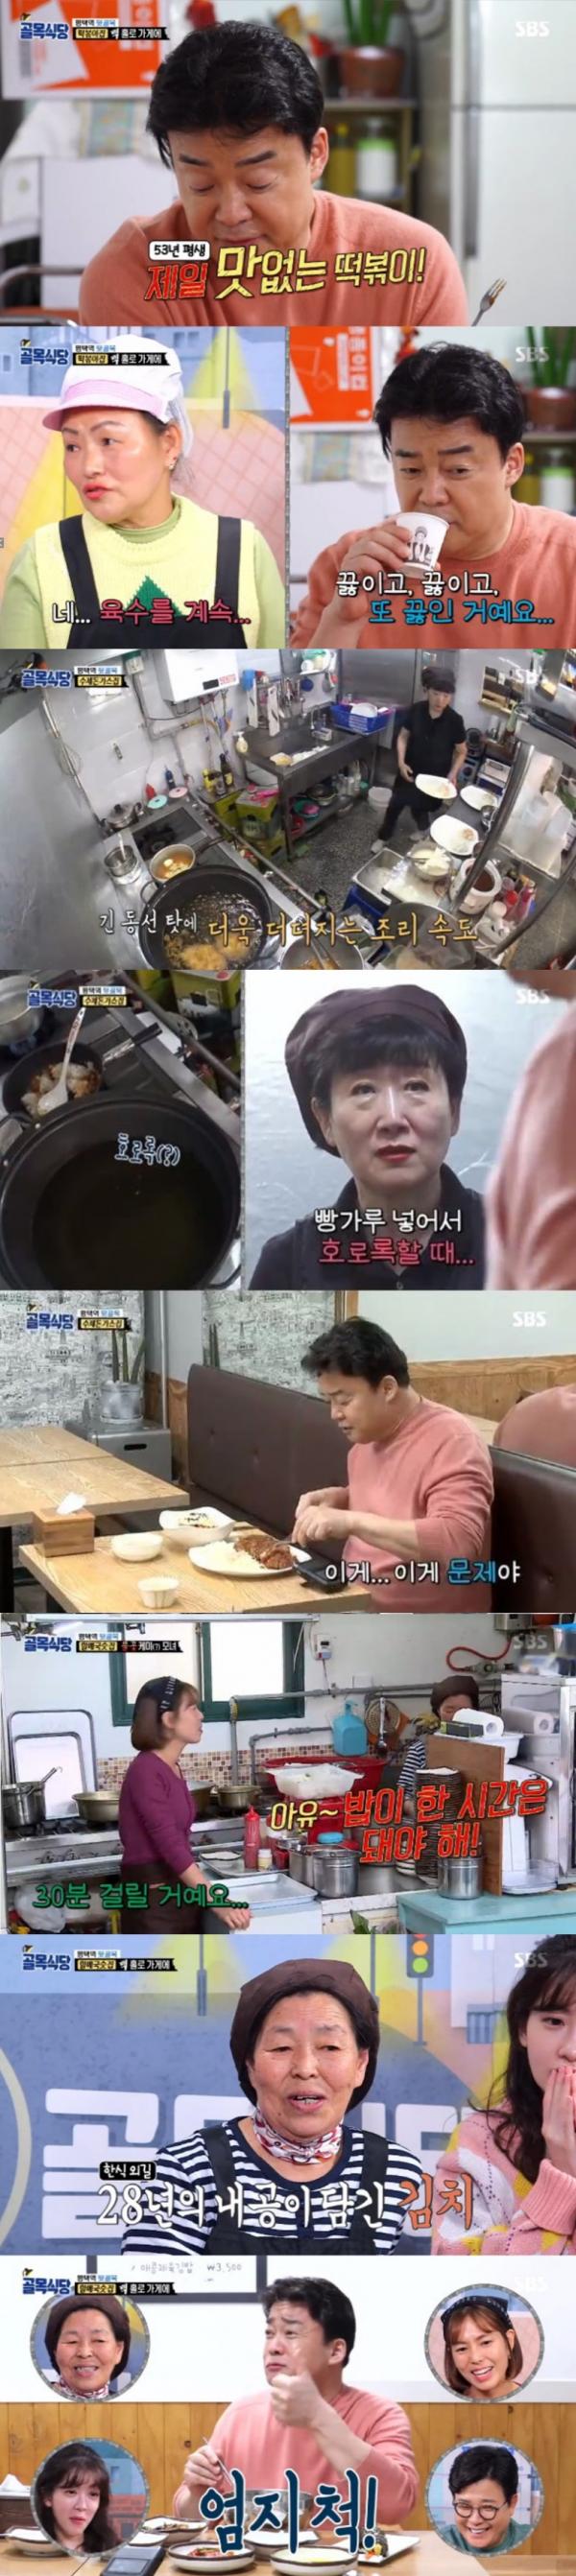 Baek Jong-won's first visit to Tteokbokki restaurant is not only on the menu board.